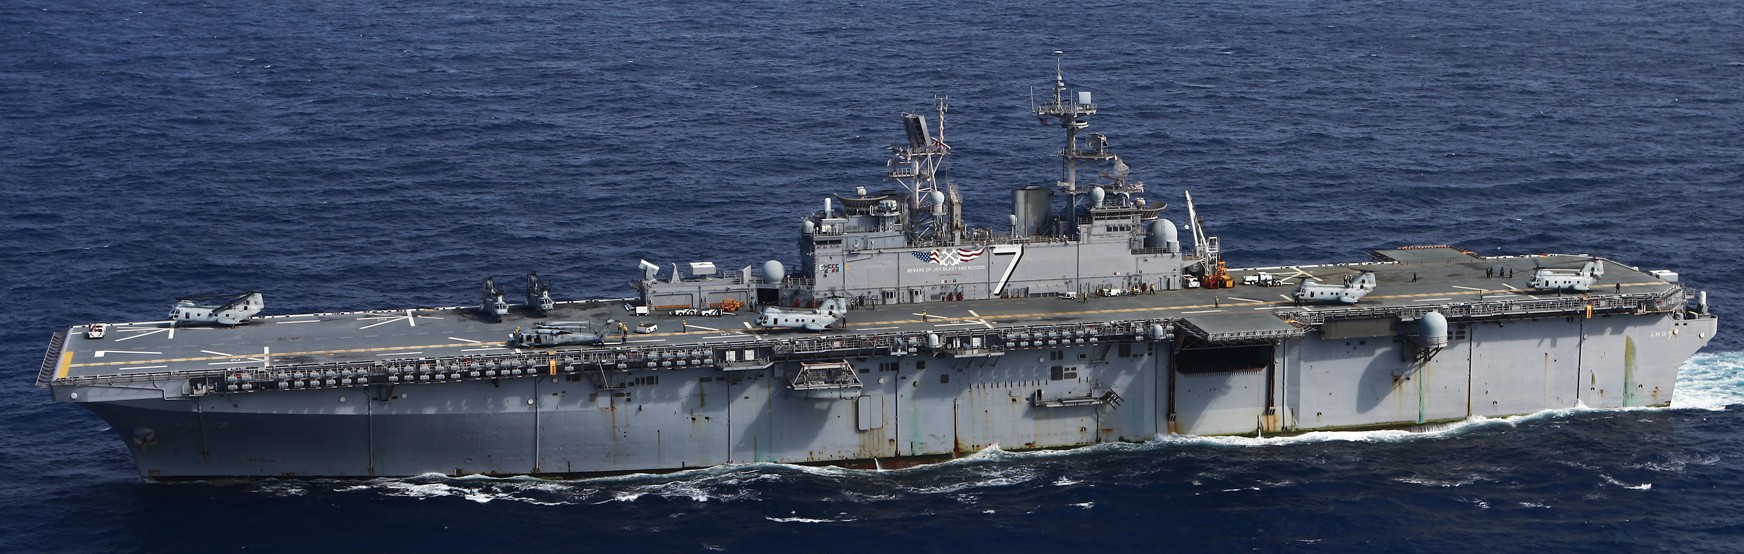 lhd-7 uss iwo jima wasp class amphibious assault ship dock landing helicopter us navy caribbean sea 96